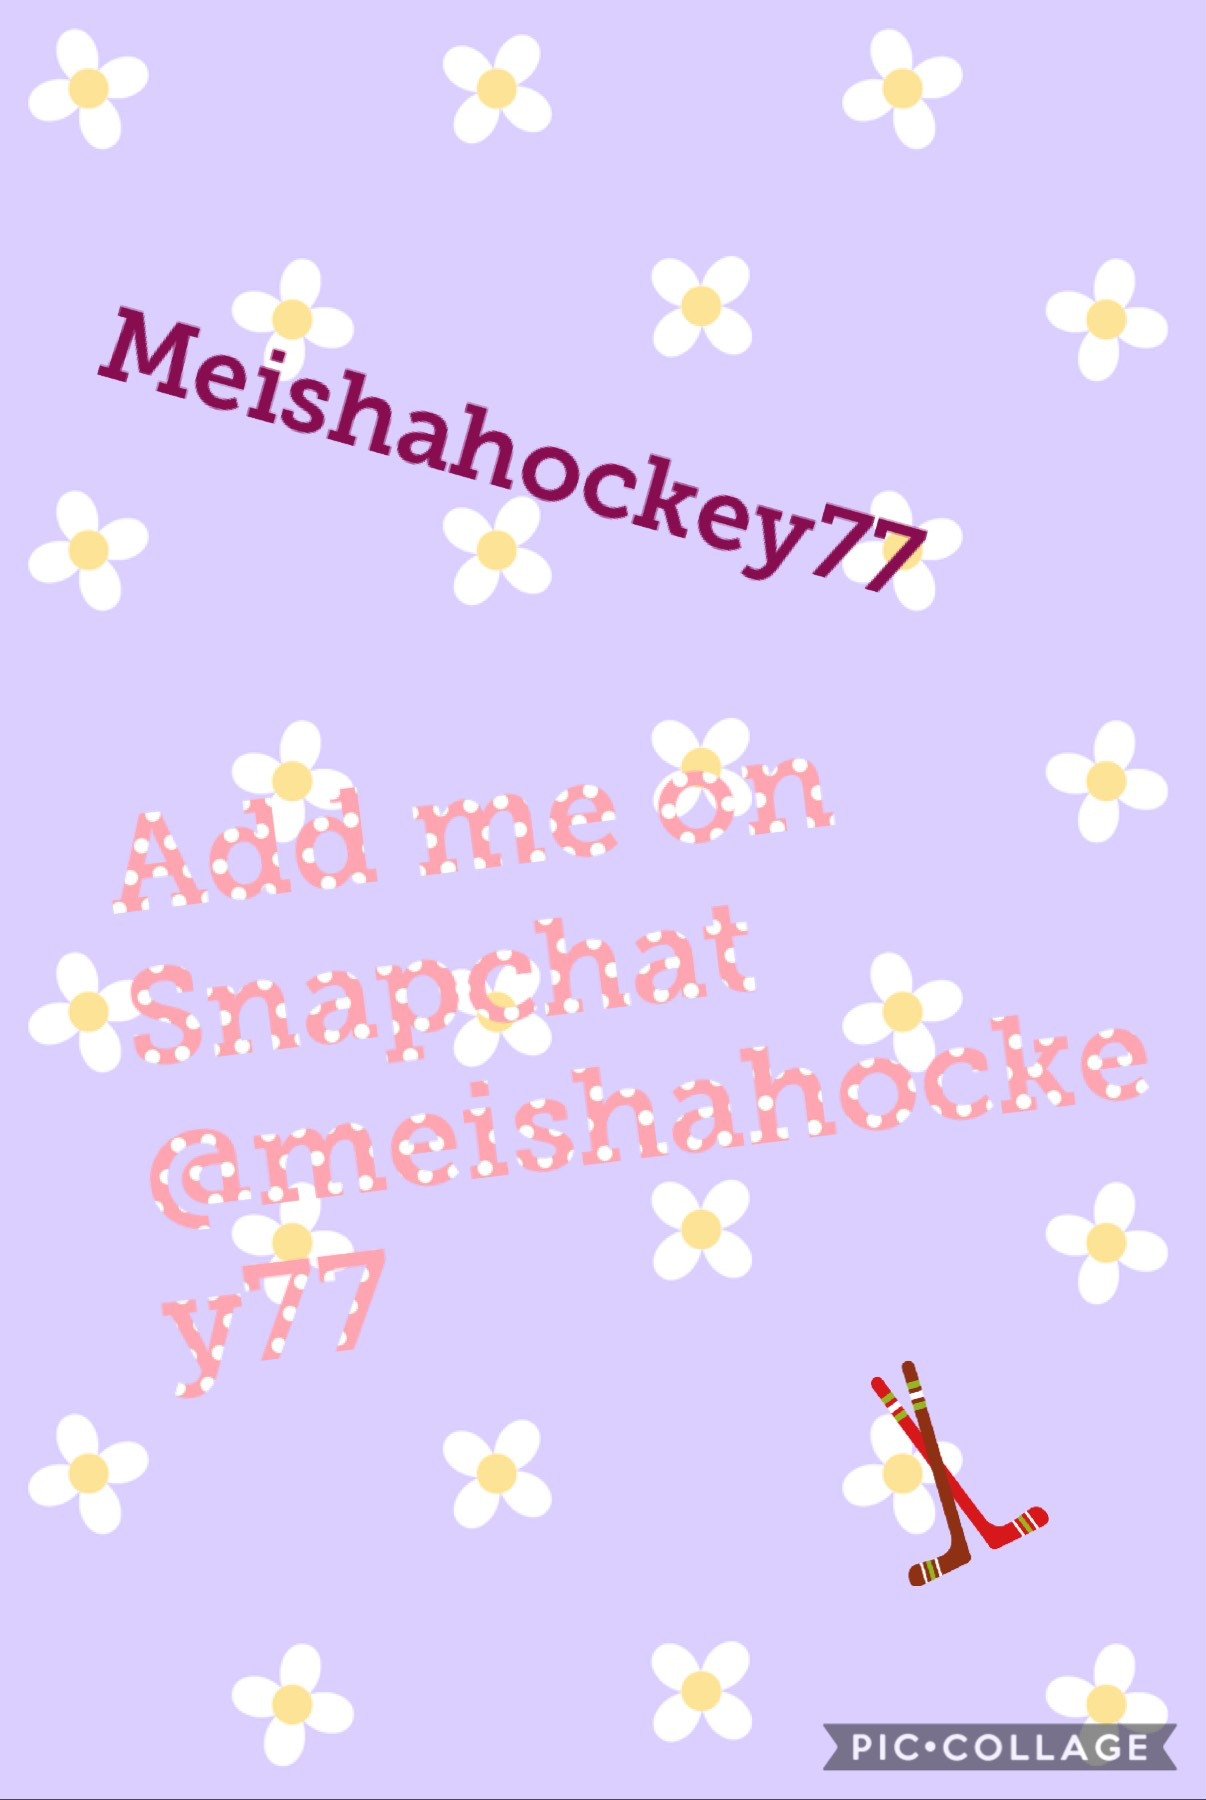 @meishahockey77